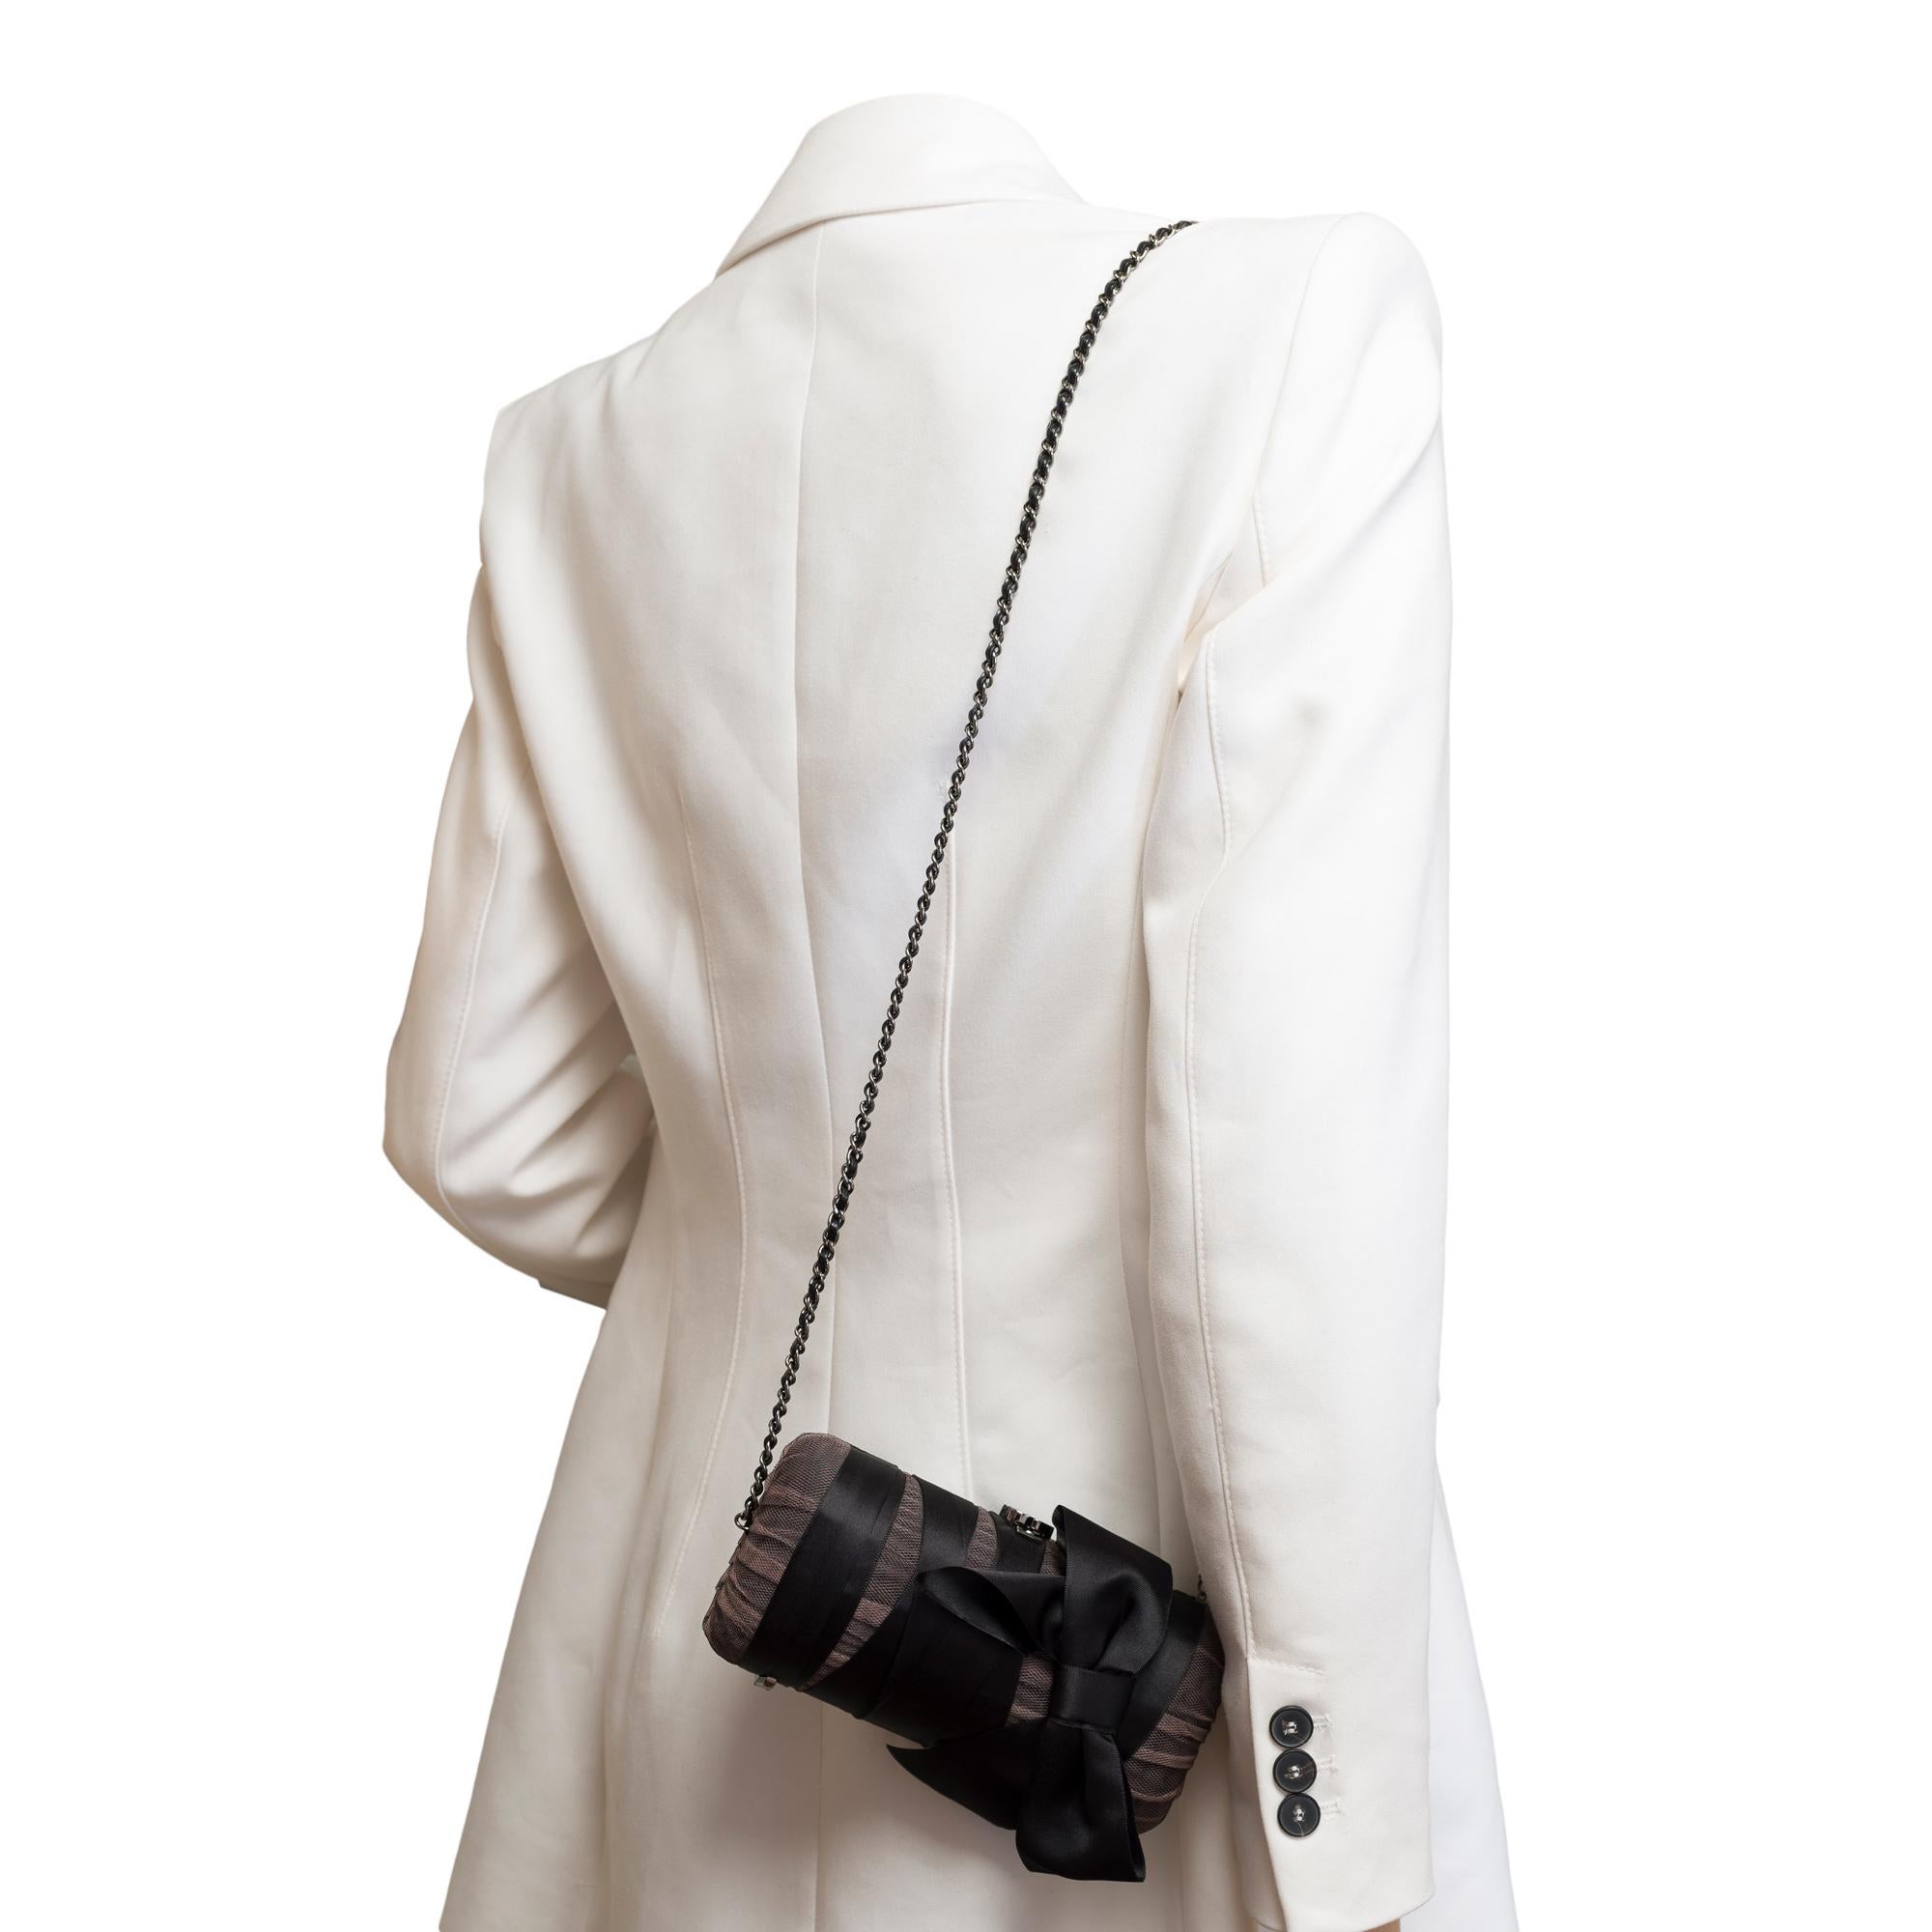 Rare limited edition Chanel Minaudière shoulder bag in black silk satin, BSHW For Sale 11